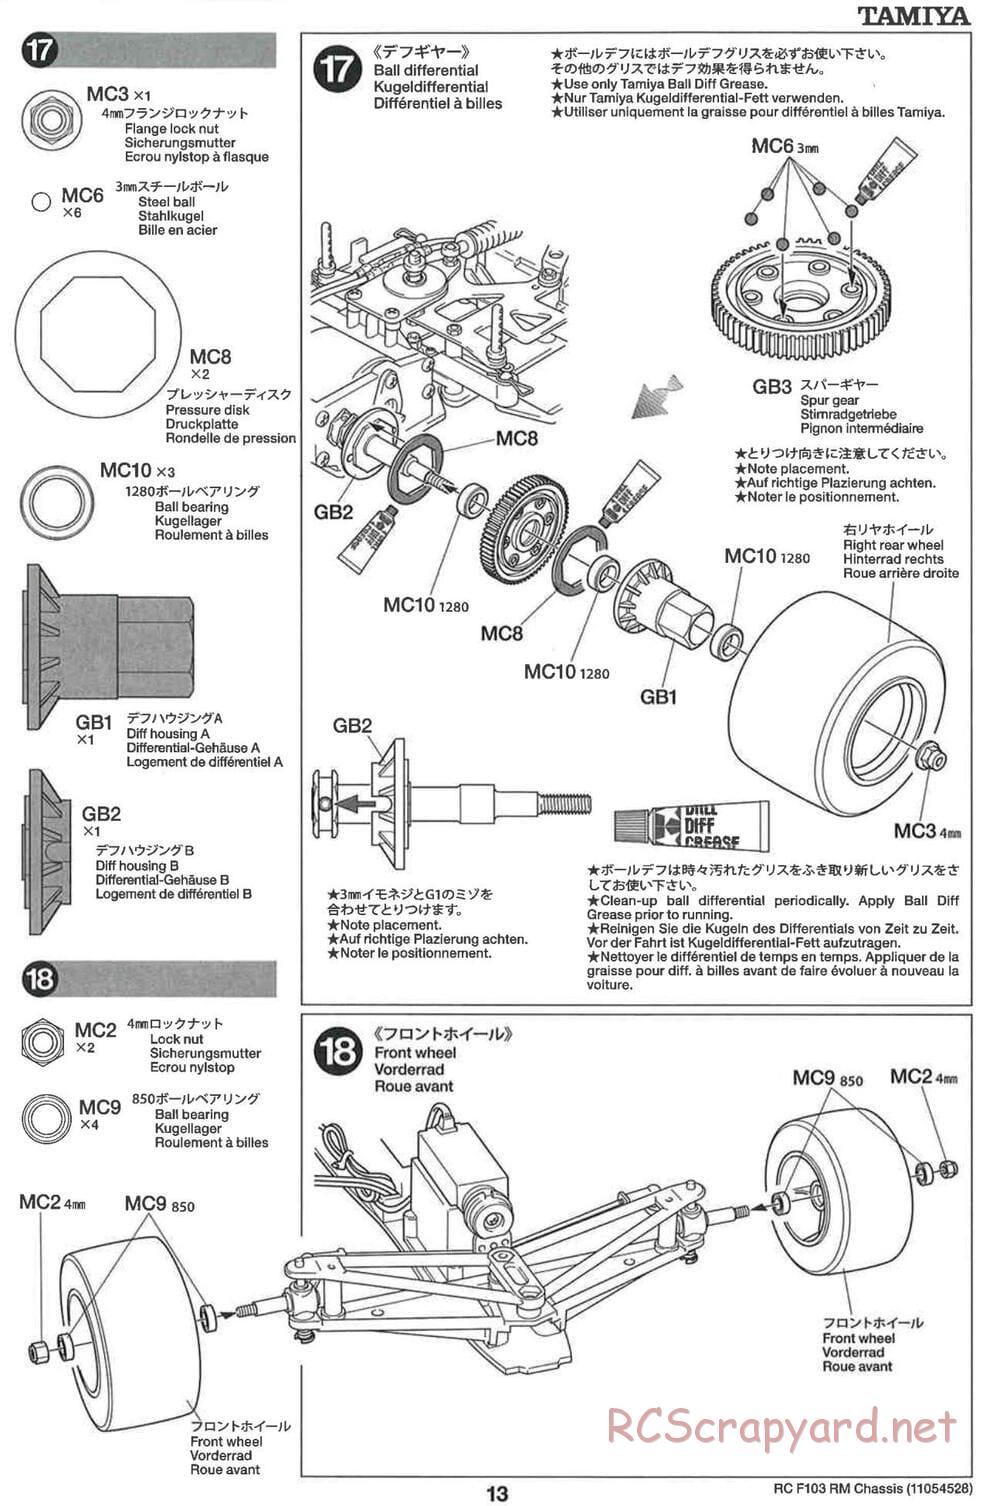 Tamiya - F103RM Chassis - Manual - Page 13